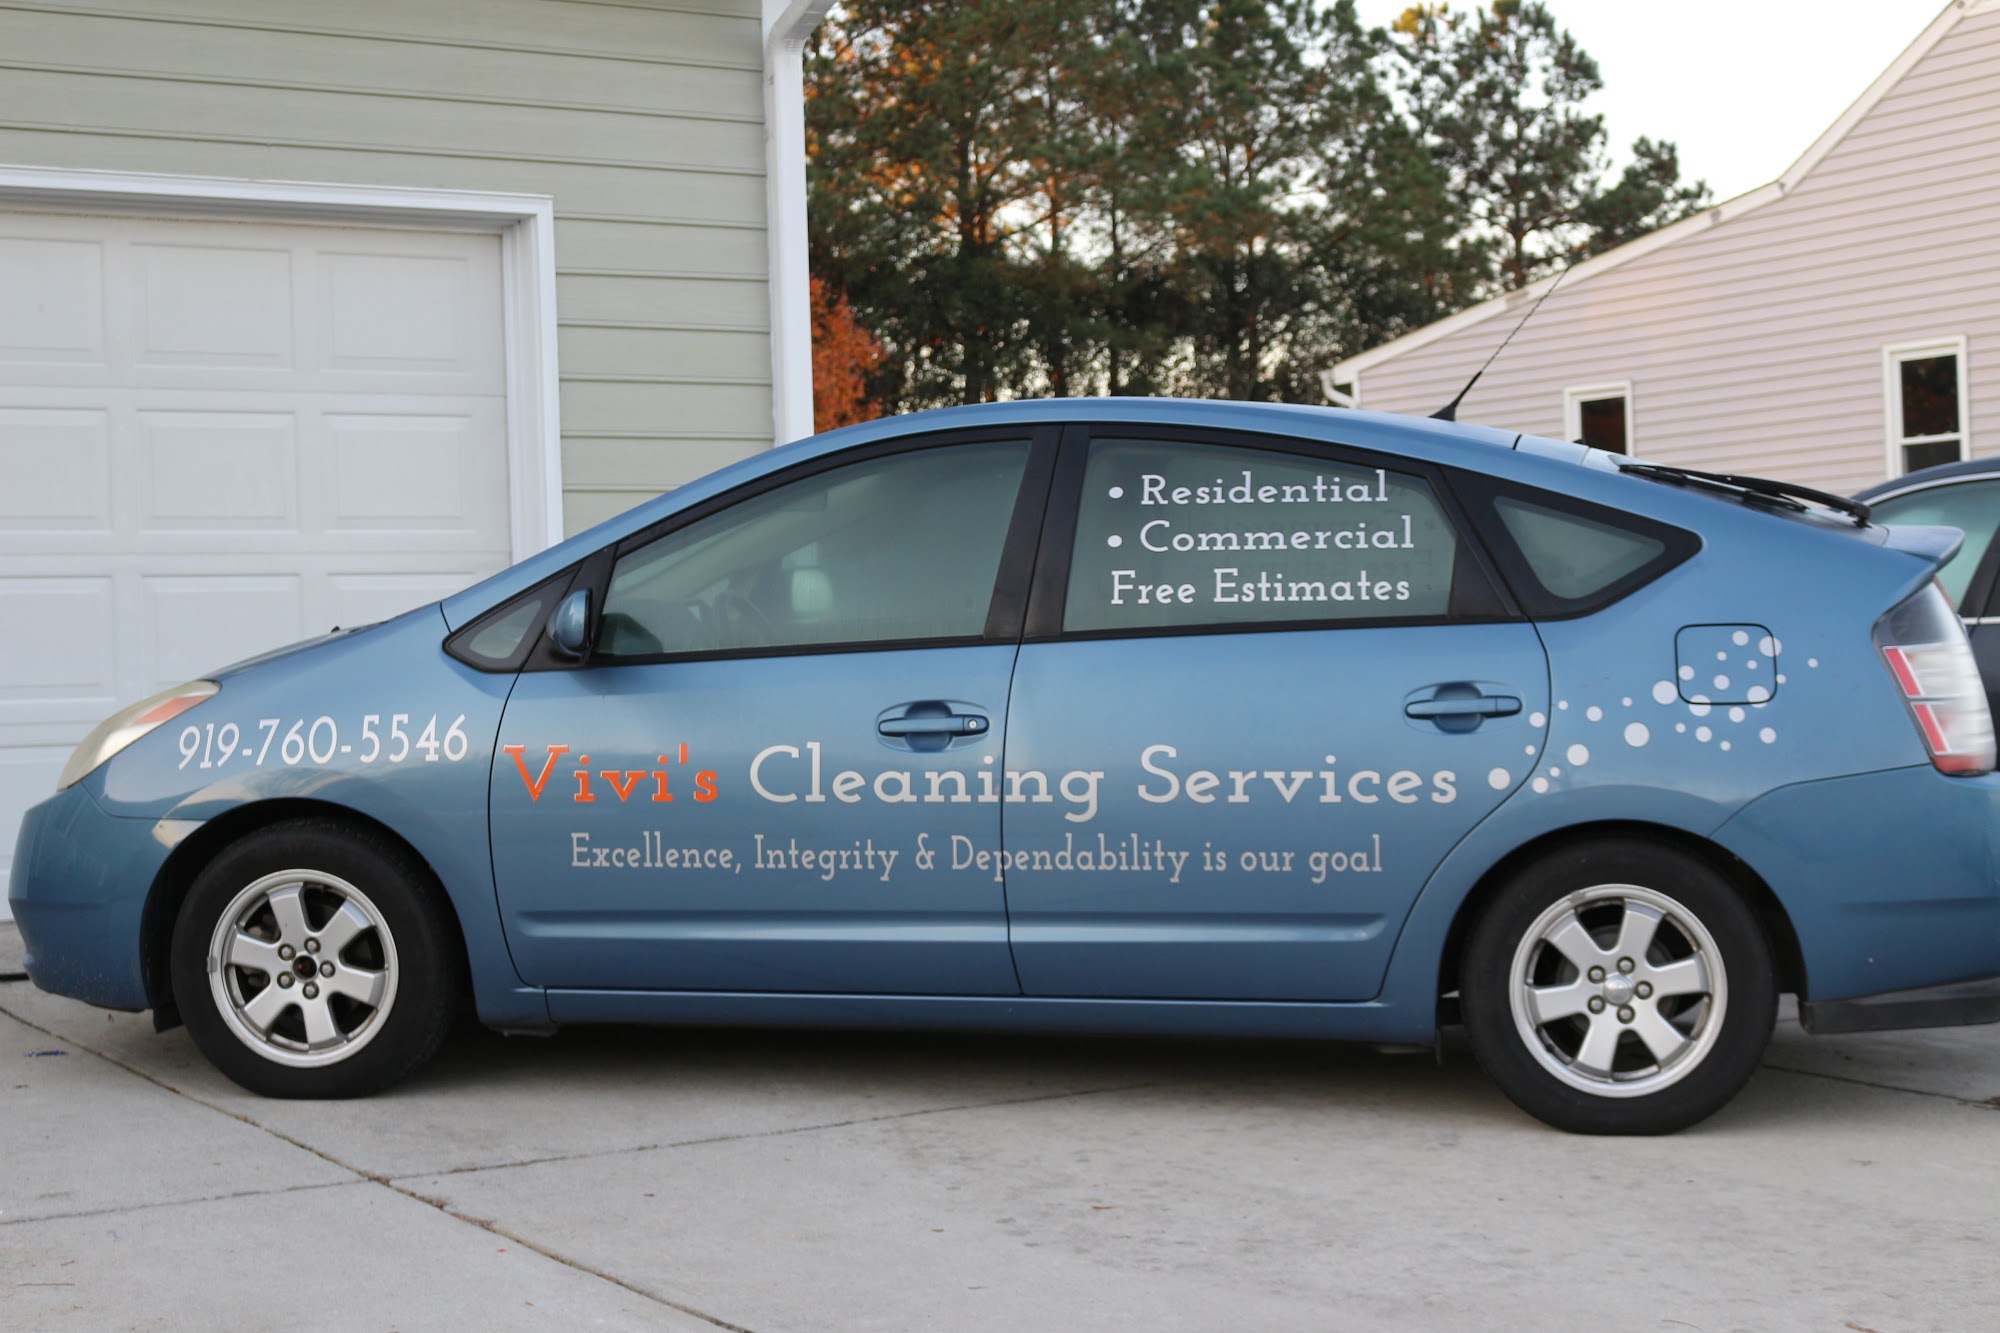 Vivi’s Cleaning Services LLC